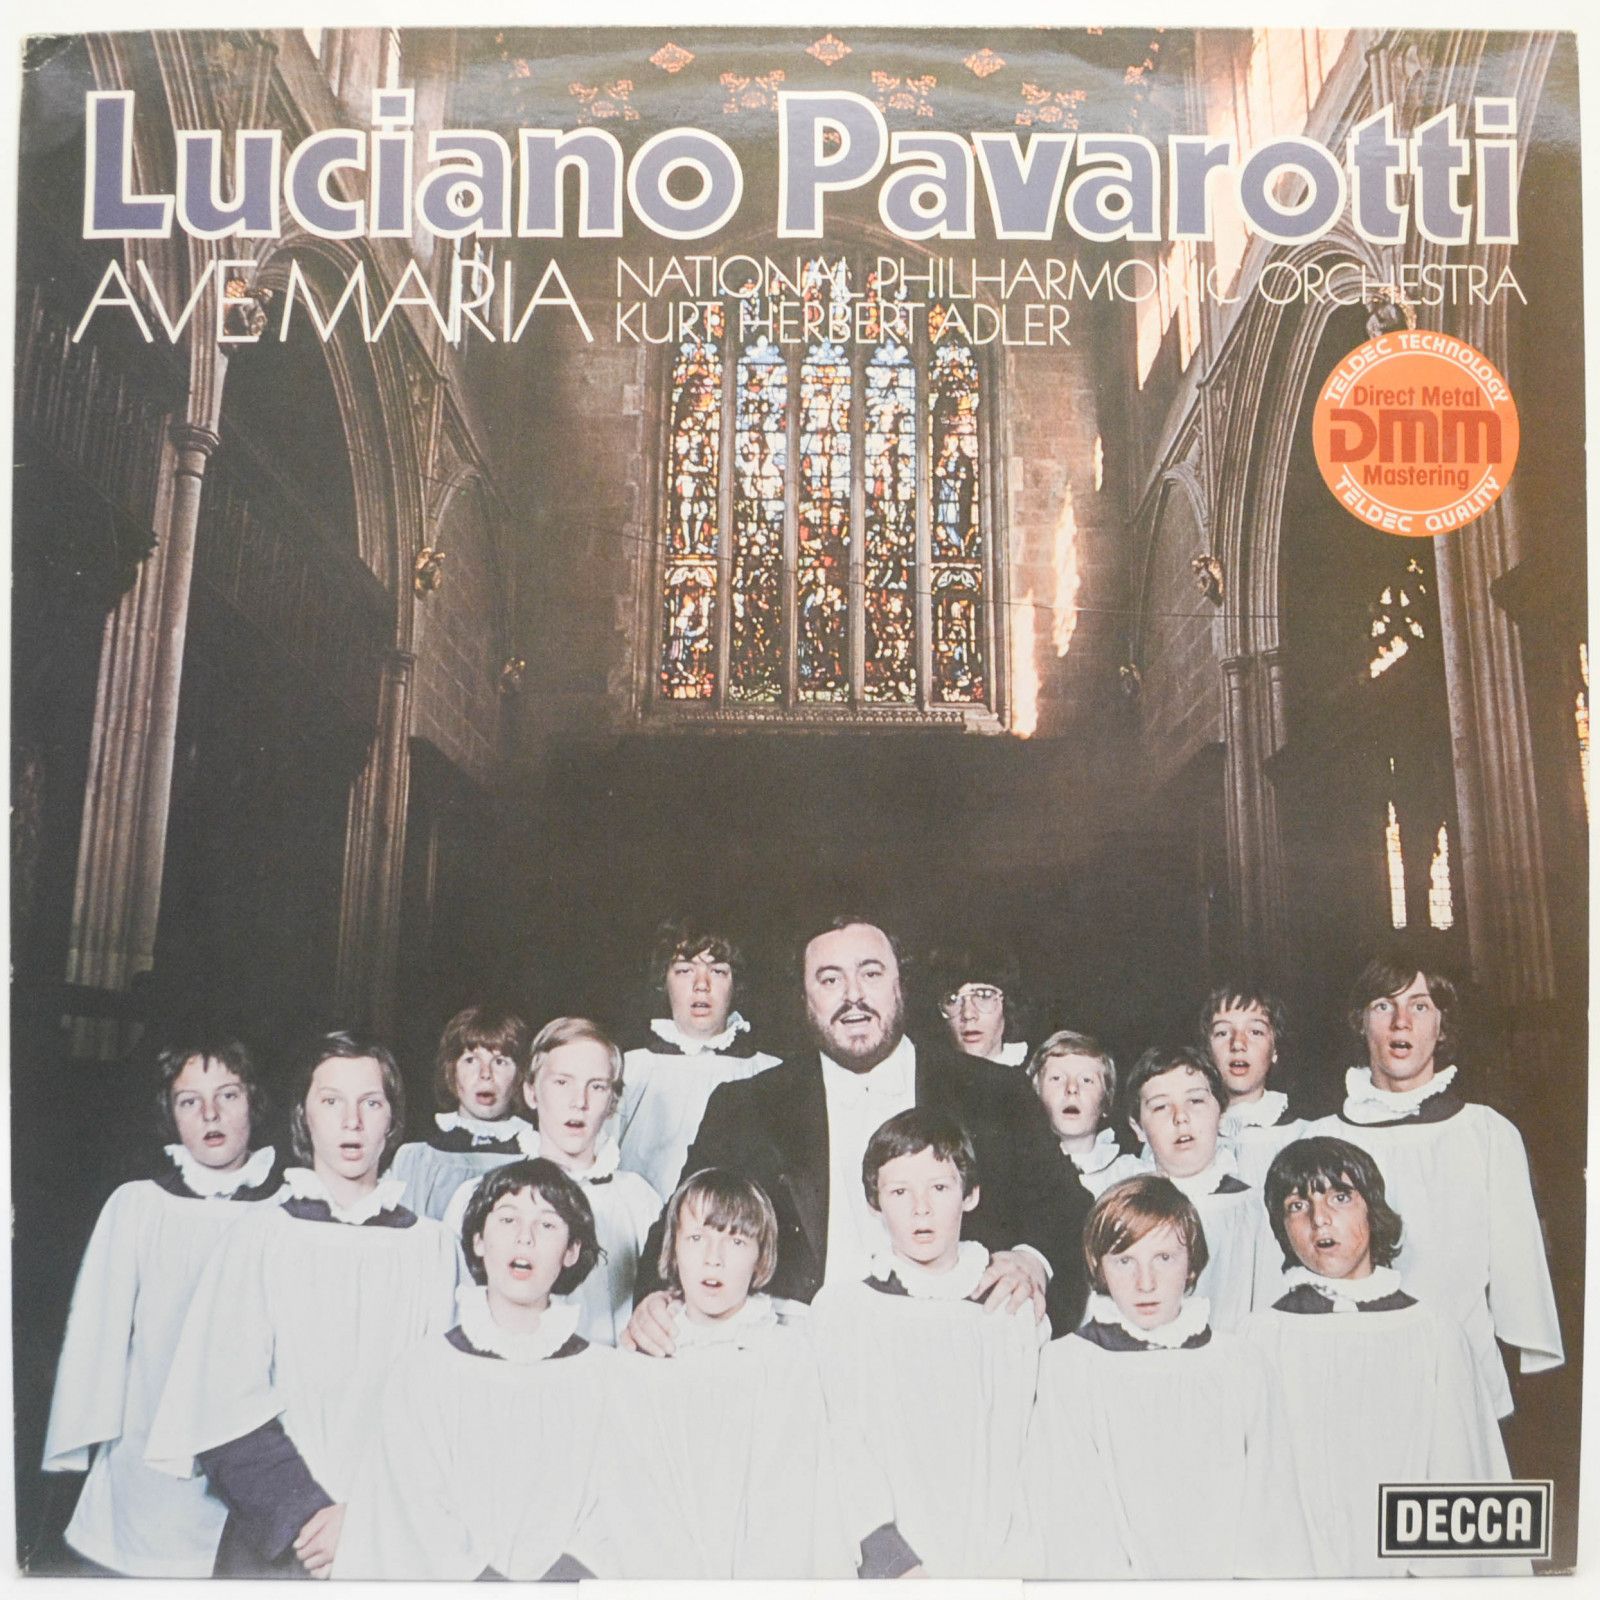 Luciano Pavarotti, Kurt Herbert Adler, National Philharmonic — Luciano Pavarotti Sings Sacred Music, 1976